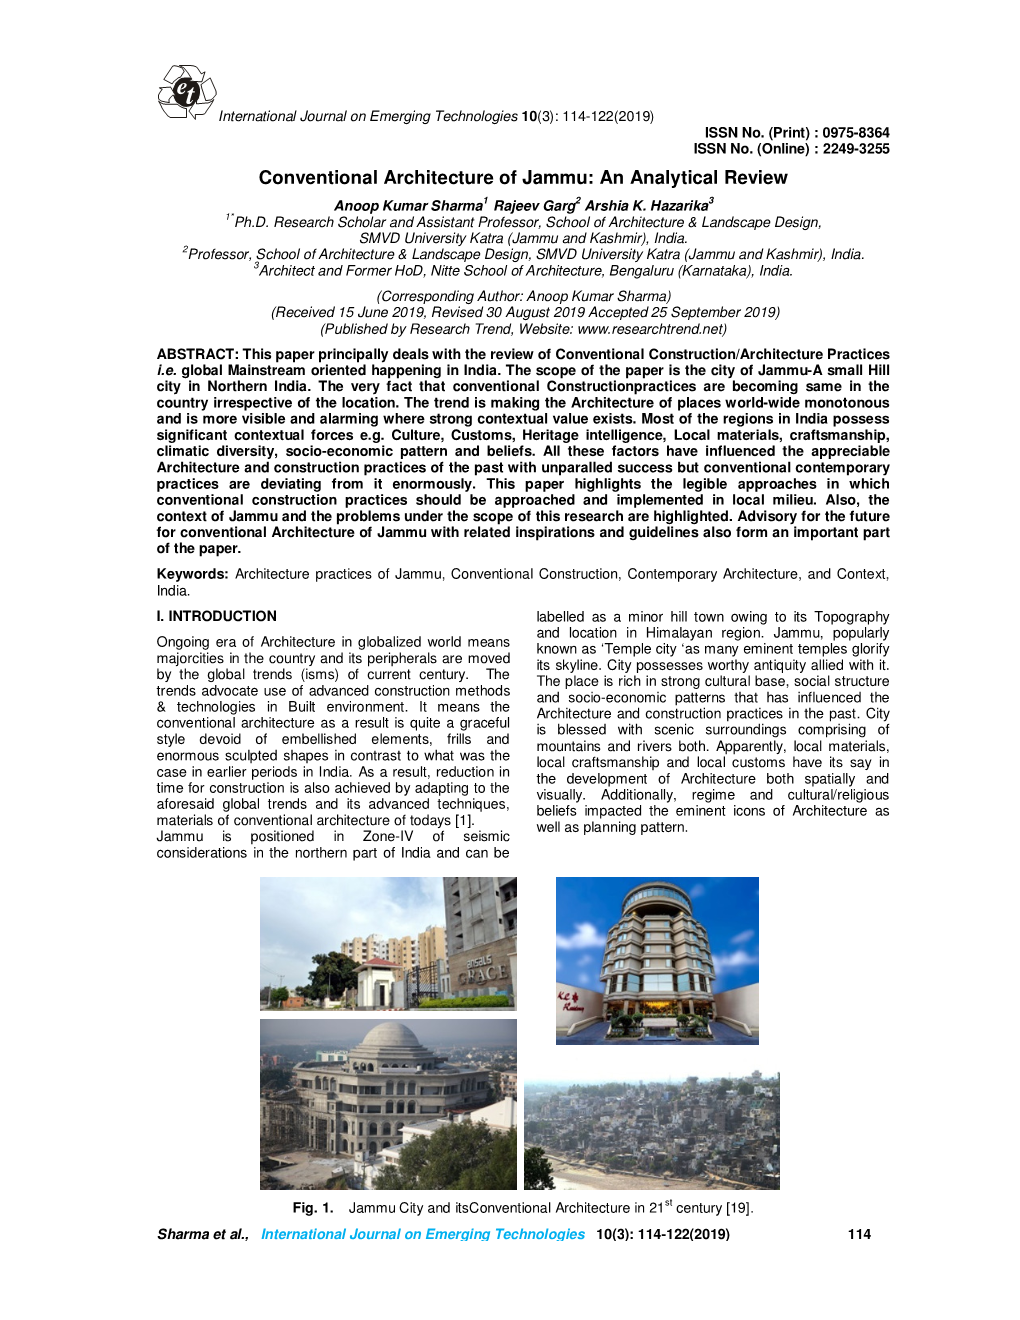 Conventional Architecture of Jammu: an Analytical Review Anoop Kumar Sharma 1 Rajeev Garg 2 Arshia K